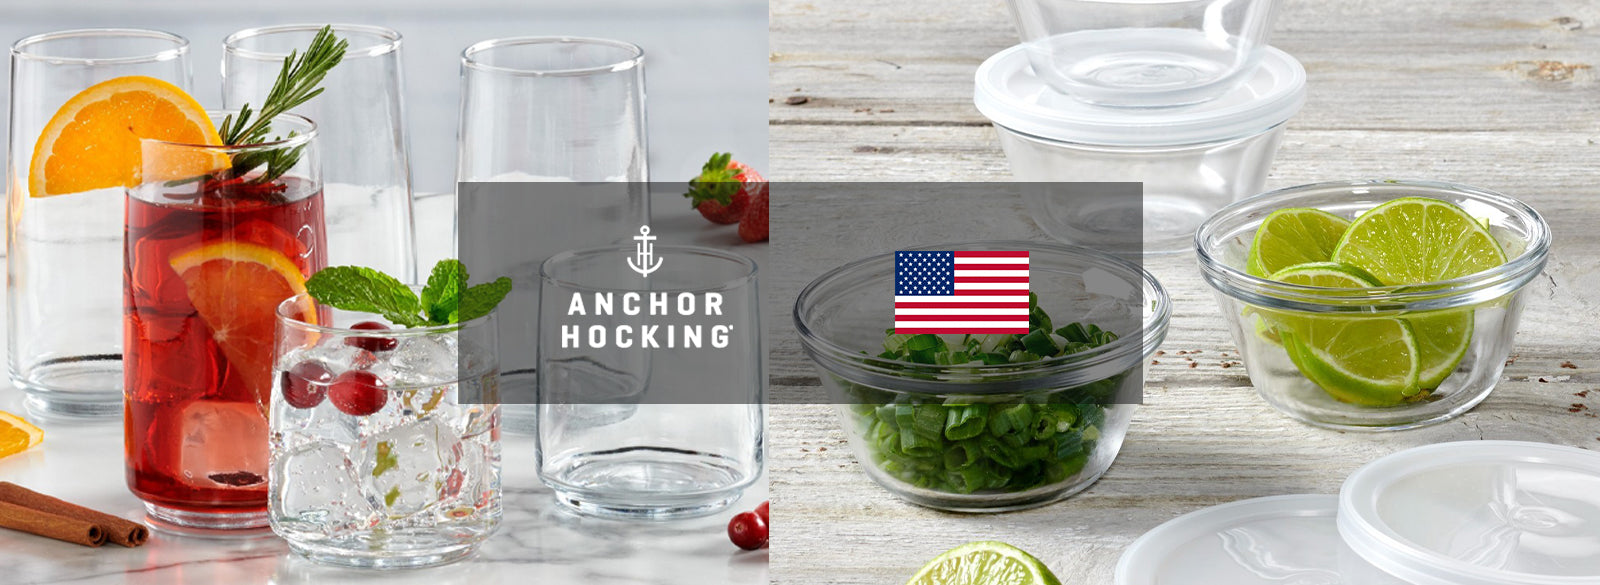 anchor-hocking